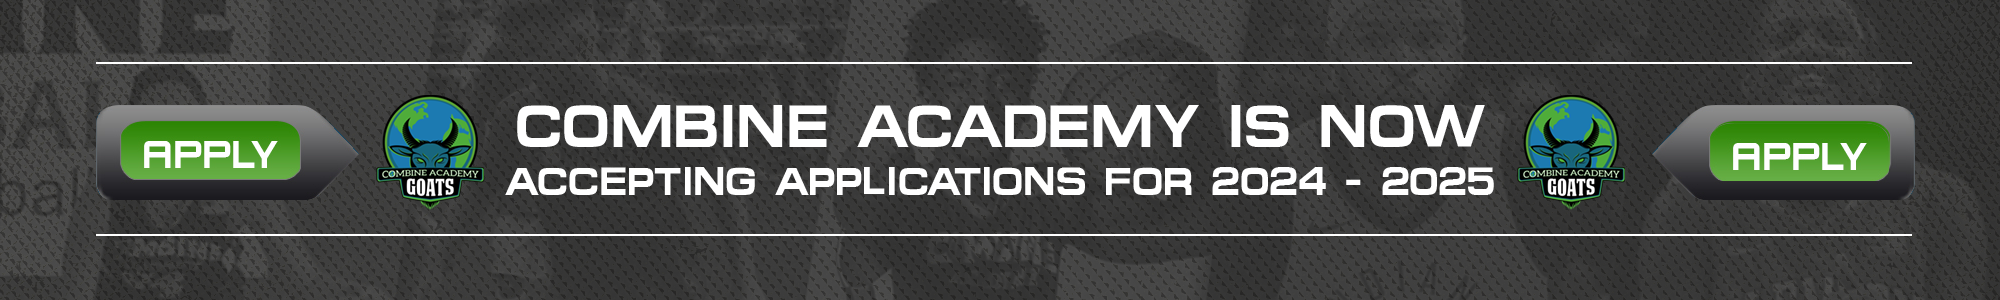 Combine Academy Applications Banner